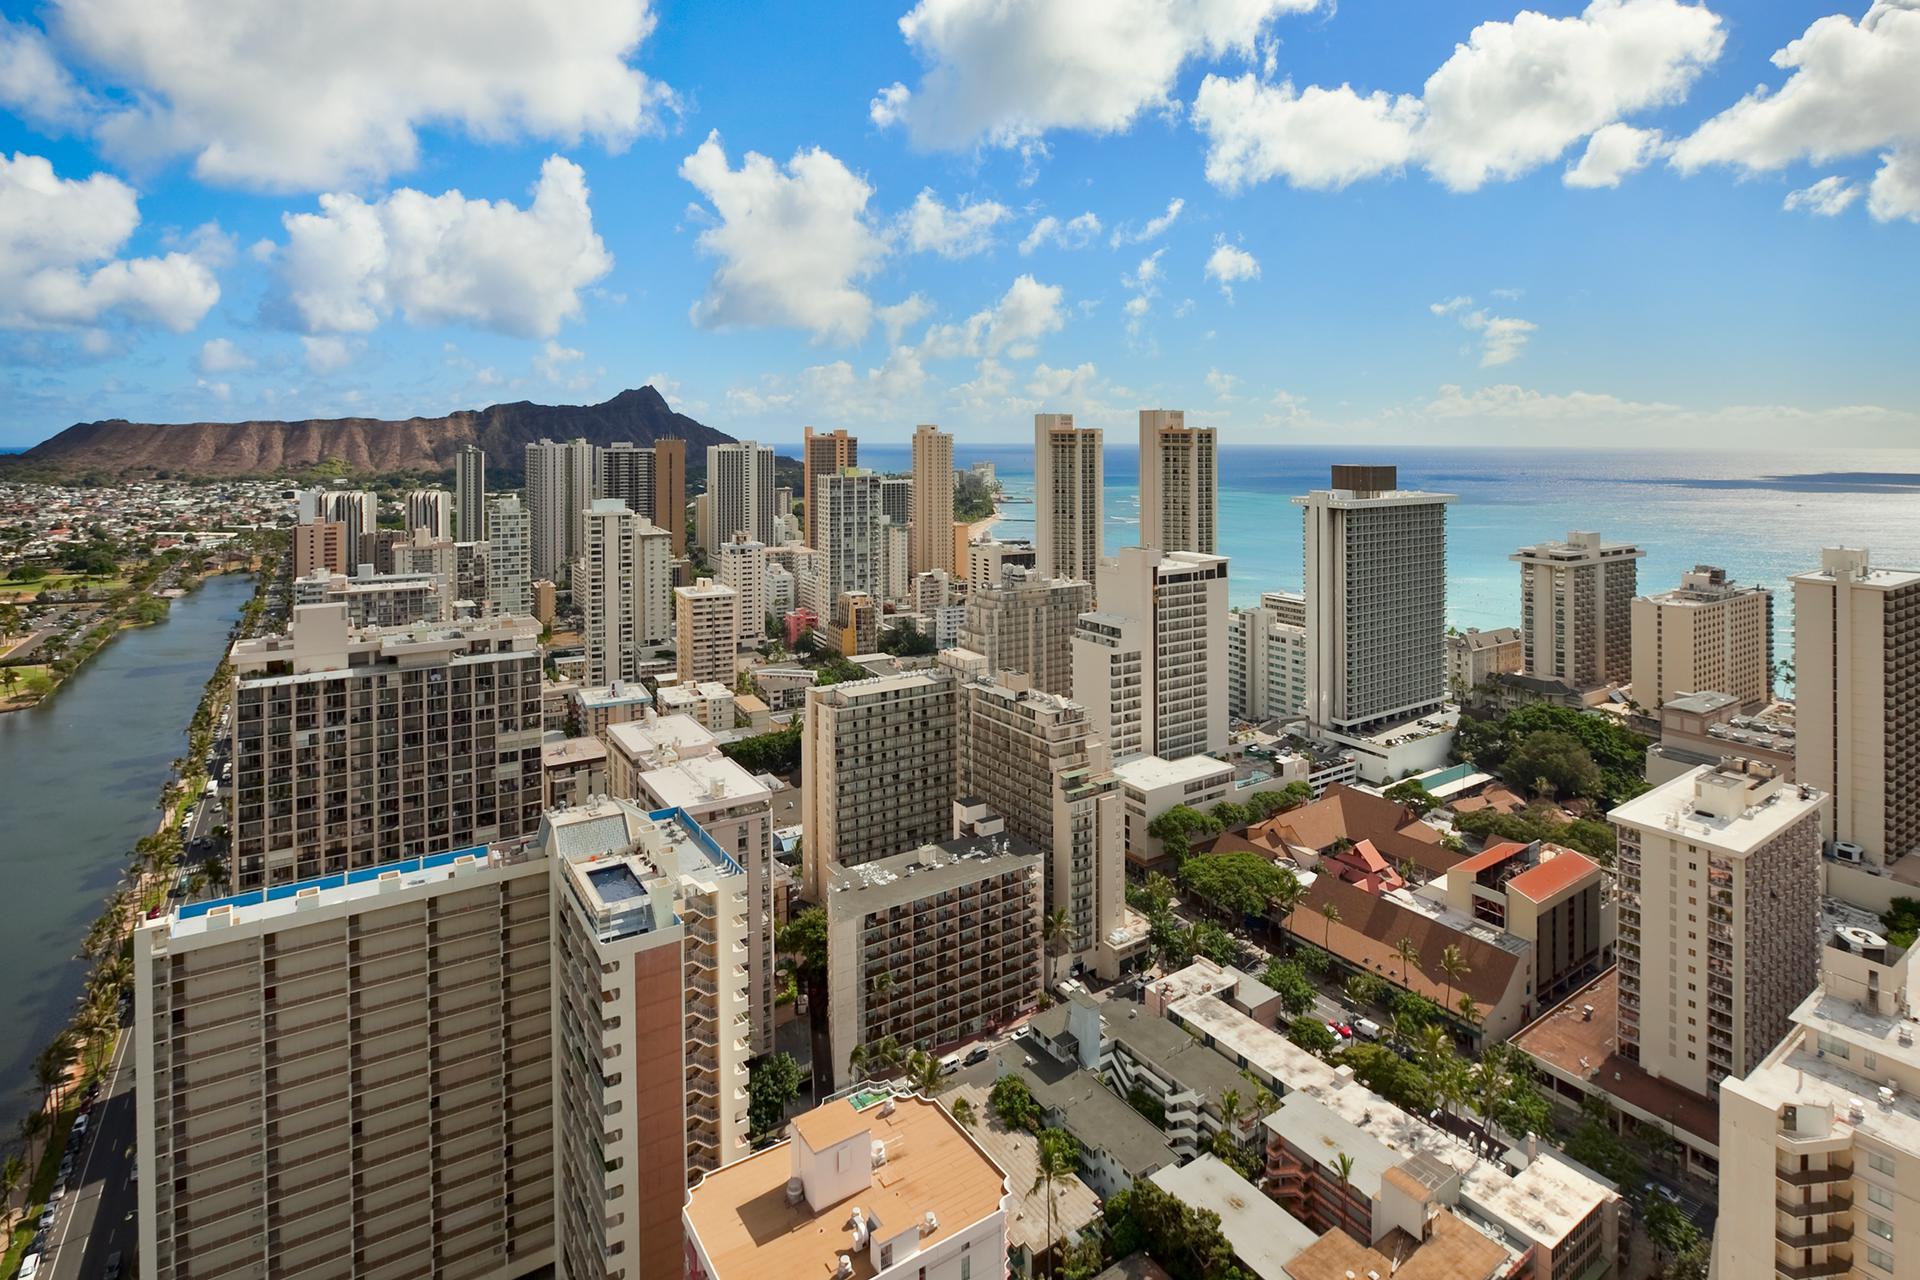 View of Waikiki from Aqua Skyline at Island Colony